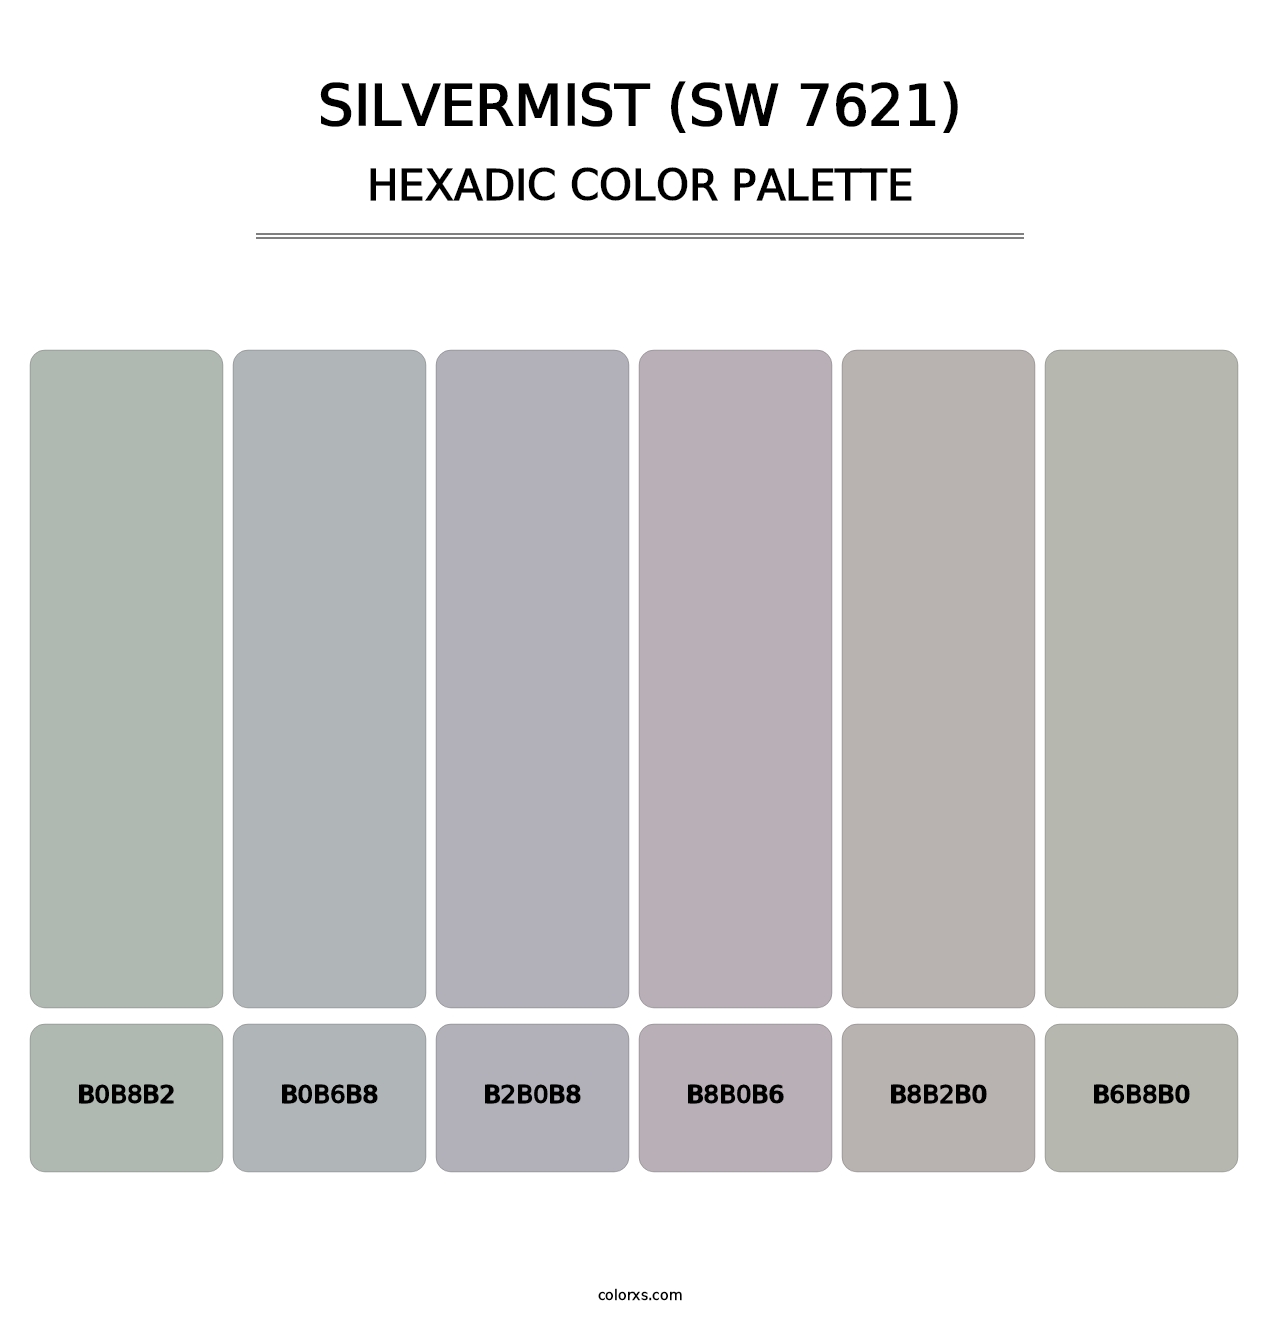 Silvermist (SW 7621) - Hexadic Color Palette